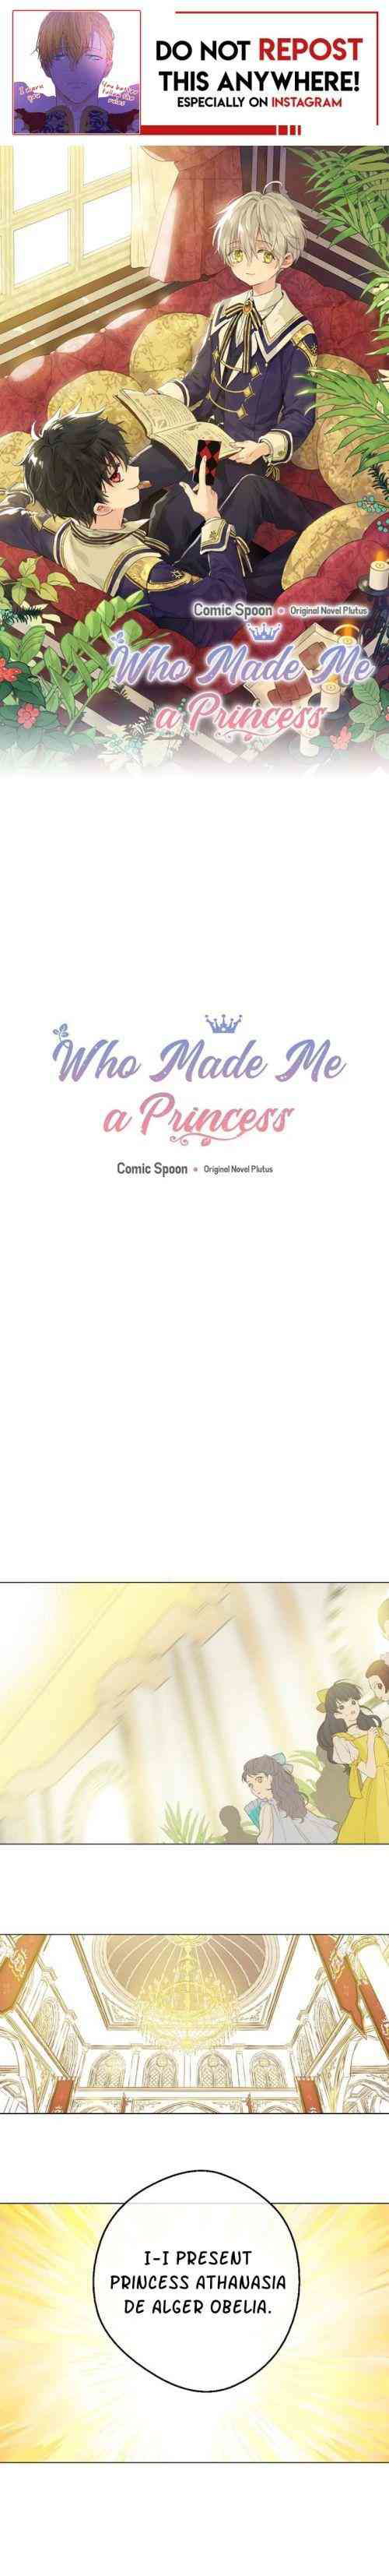 Who Made Me A Princess Chapter 51 page 1